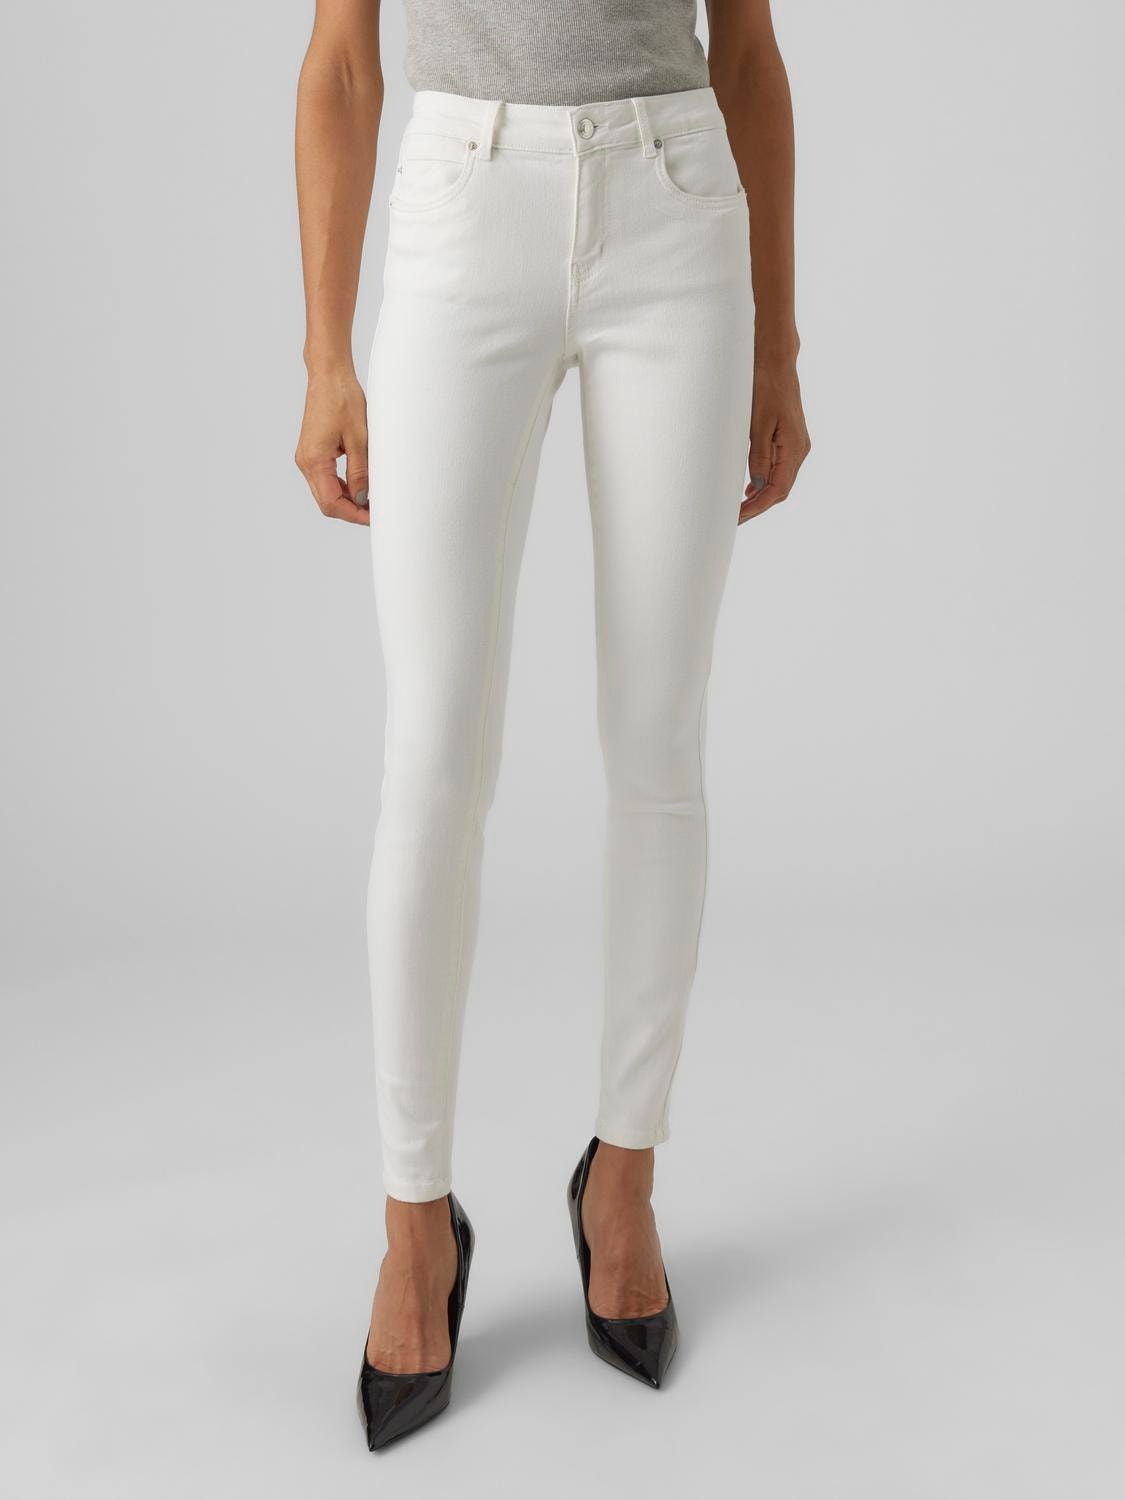 malm Besætte Mangler Slim Fit Mid rise Jeans | White | Vero Moda®